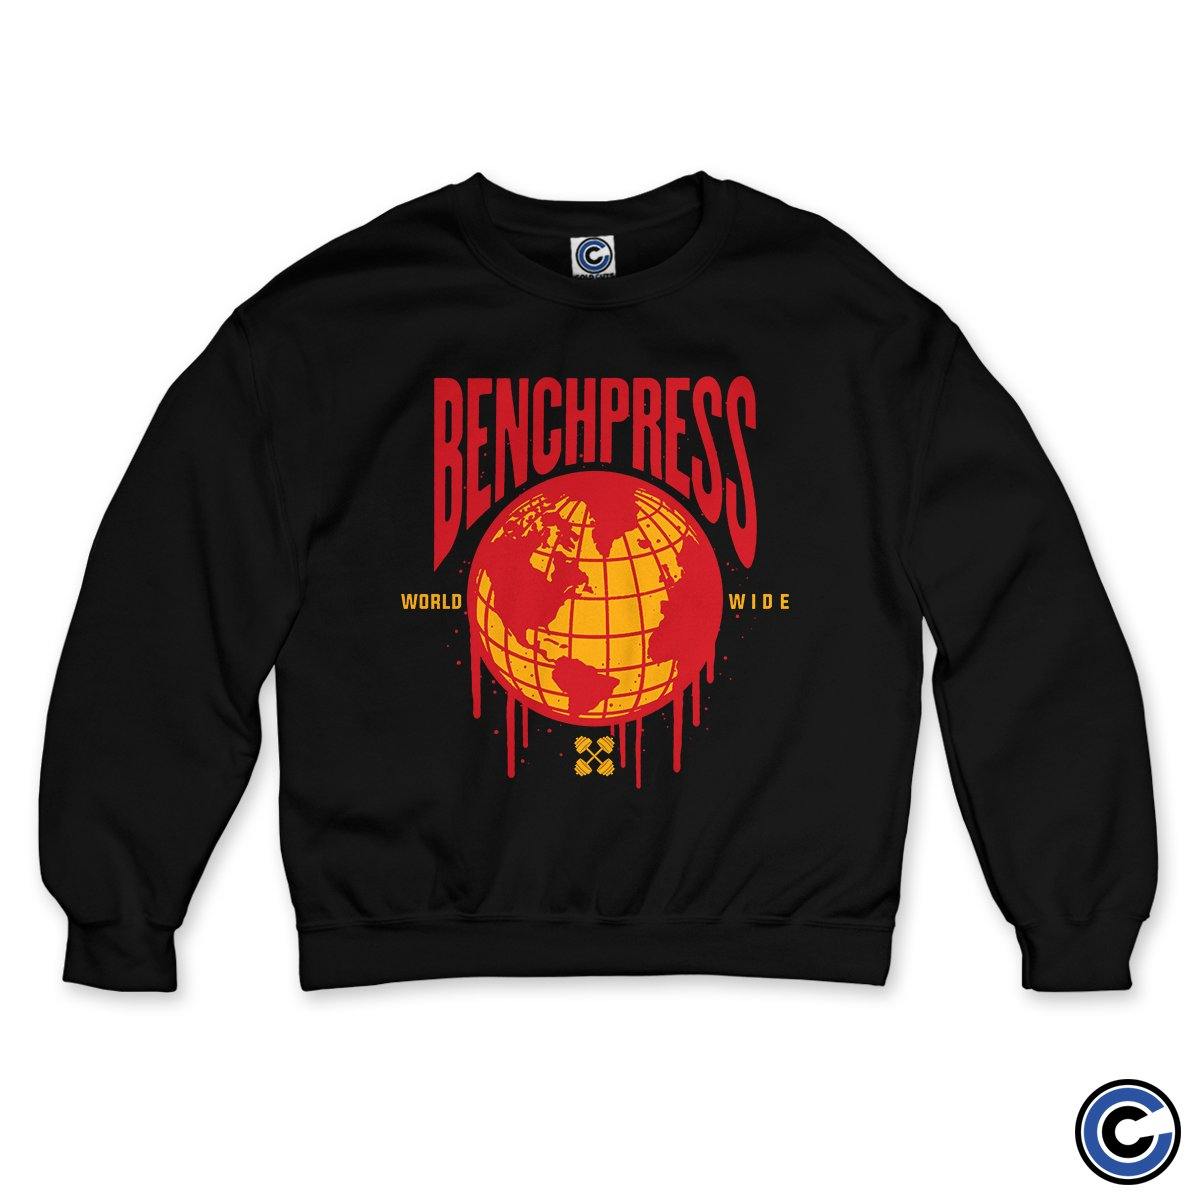 Buy – Benchpress "Worldwide" Crewneck – Band & Music Merch – Cold Cuts Merch